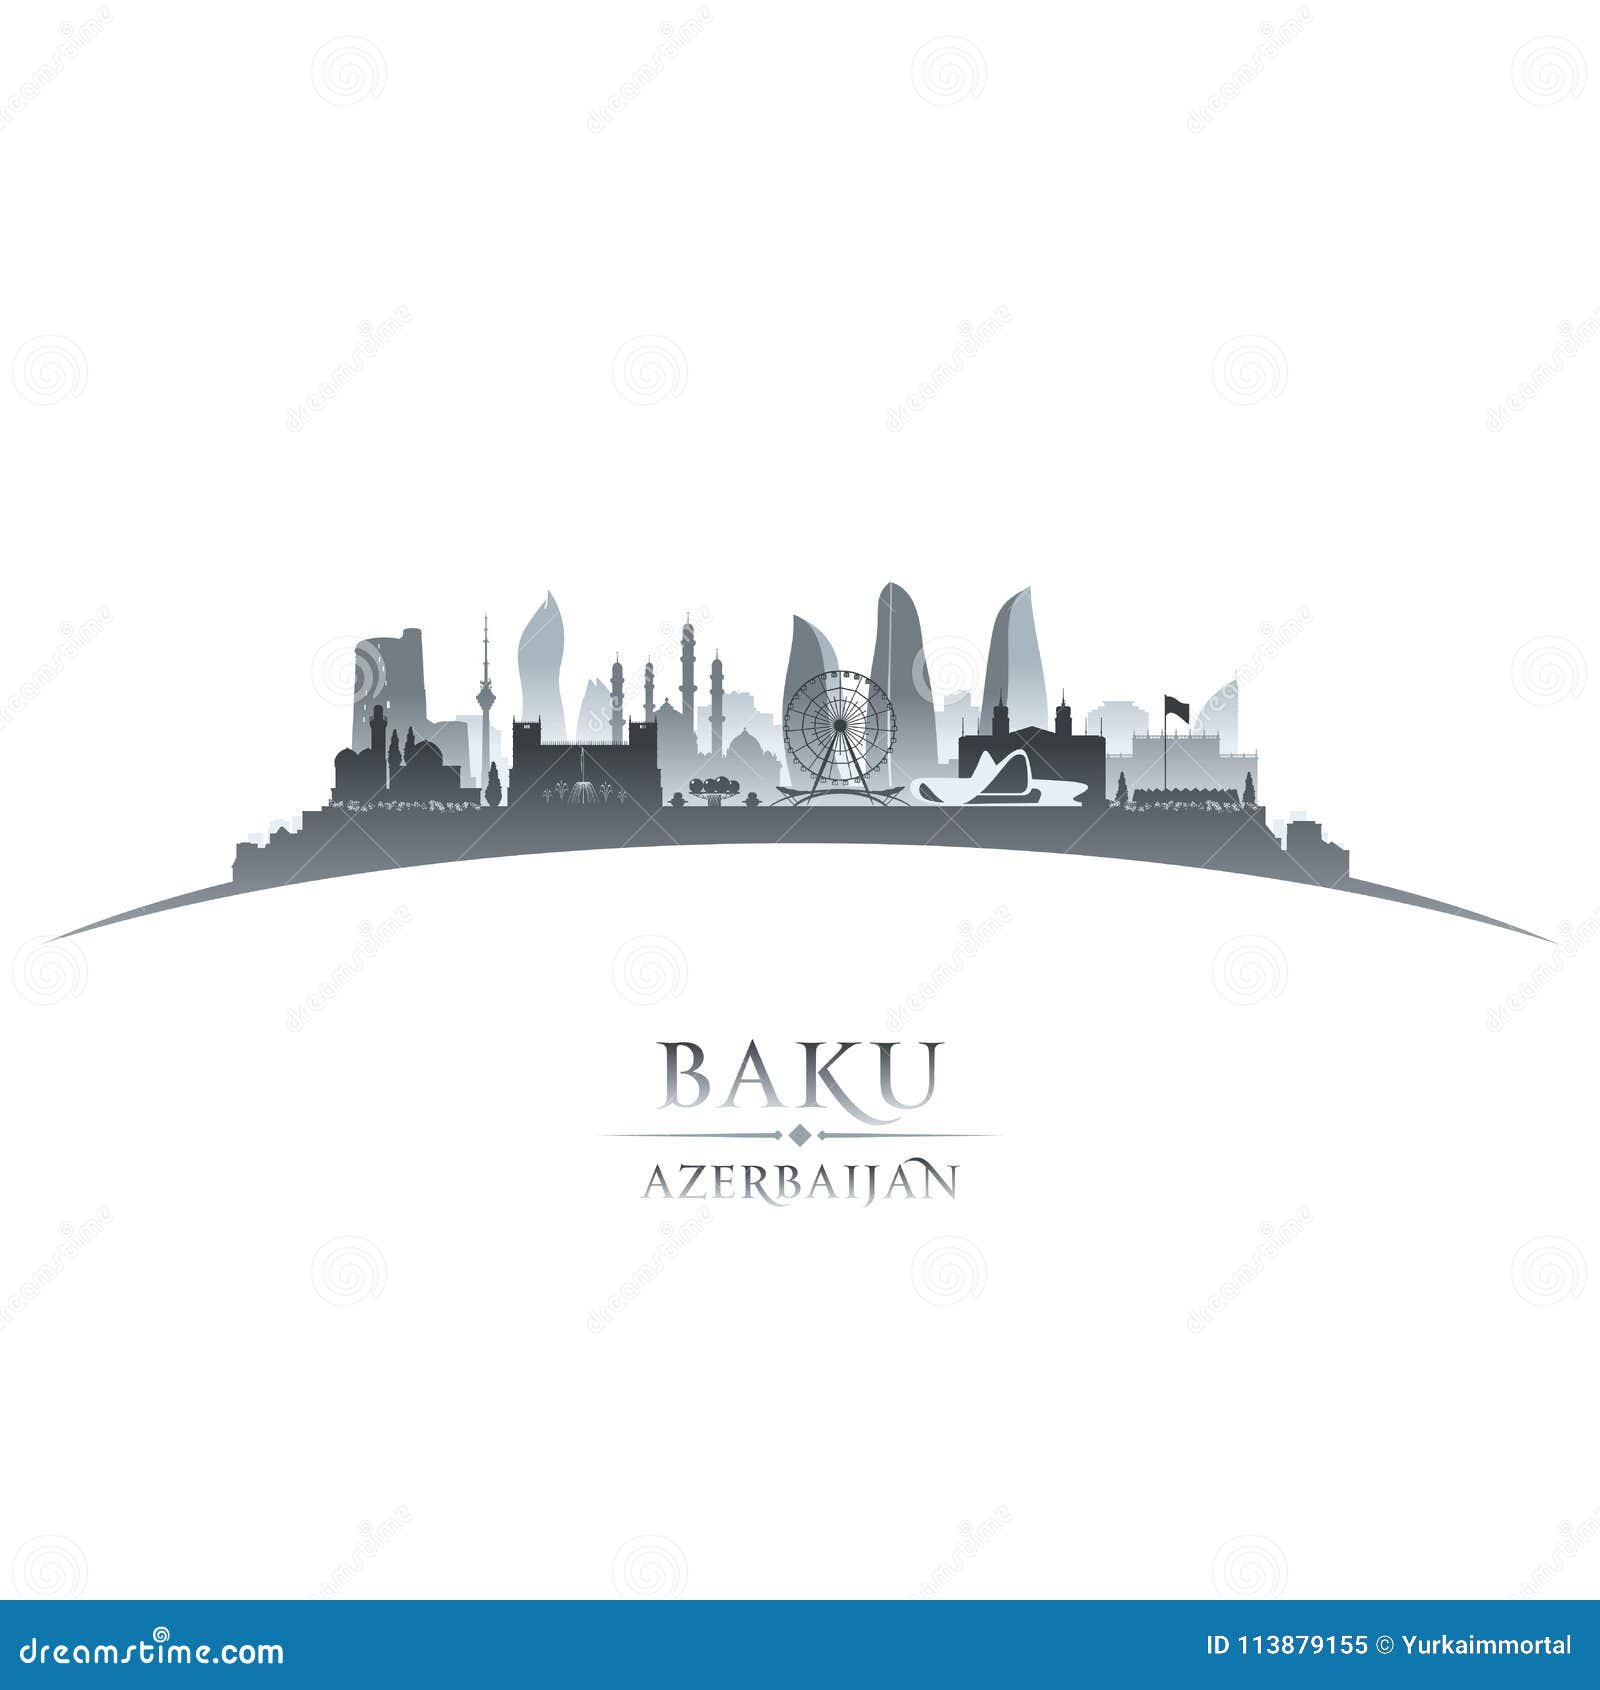 baku azerbaijan city skyline silhouette white background